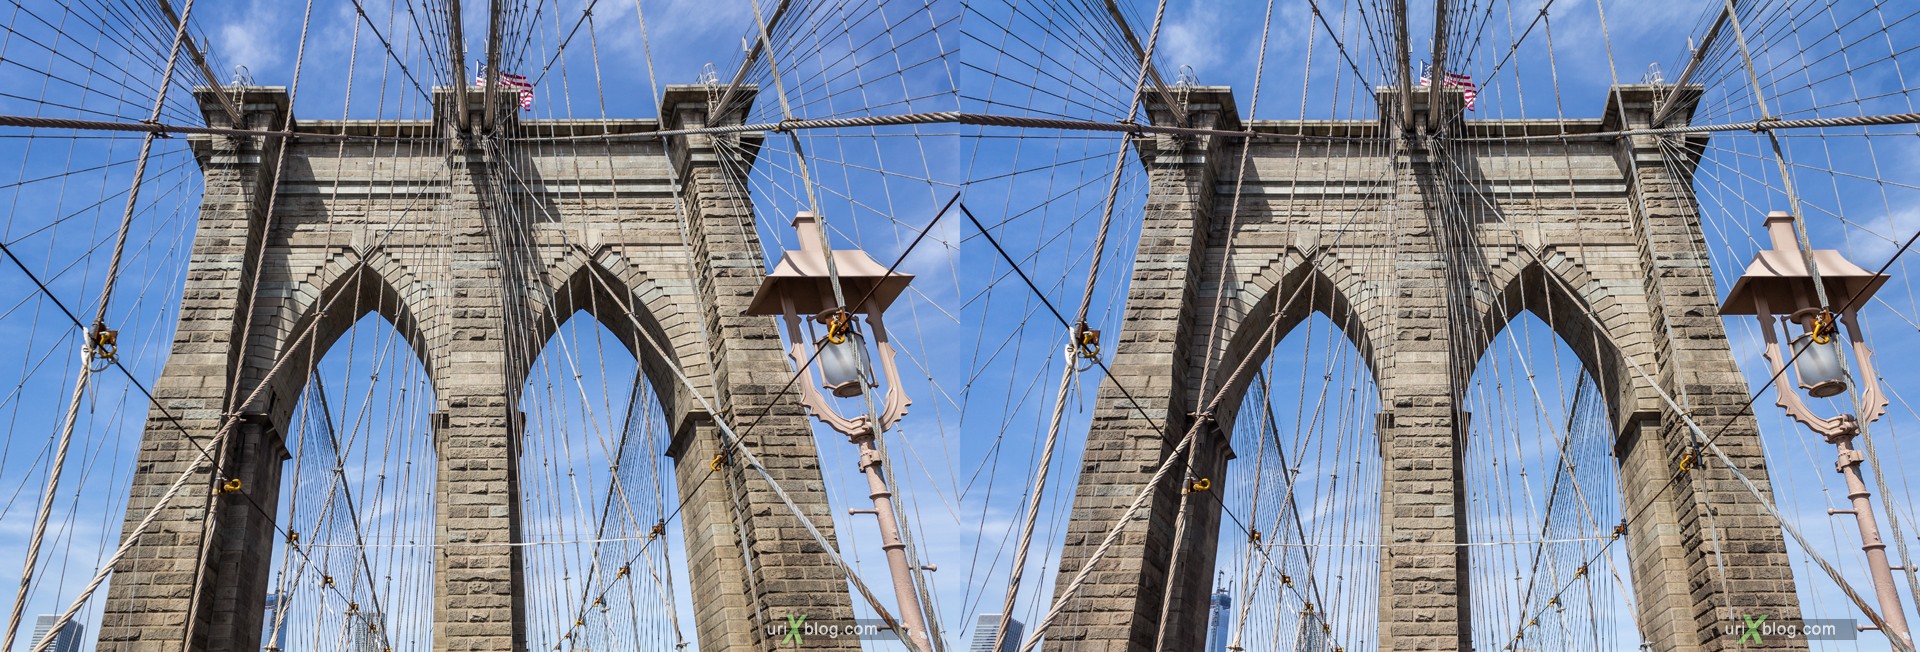 2013, Brooklyn Bridge, NYC, New York City, USA, 3D, stereo pair, cross-eyed, crossview, cross view stereo pair, stereoscopic